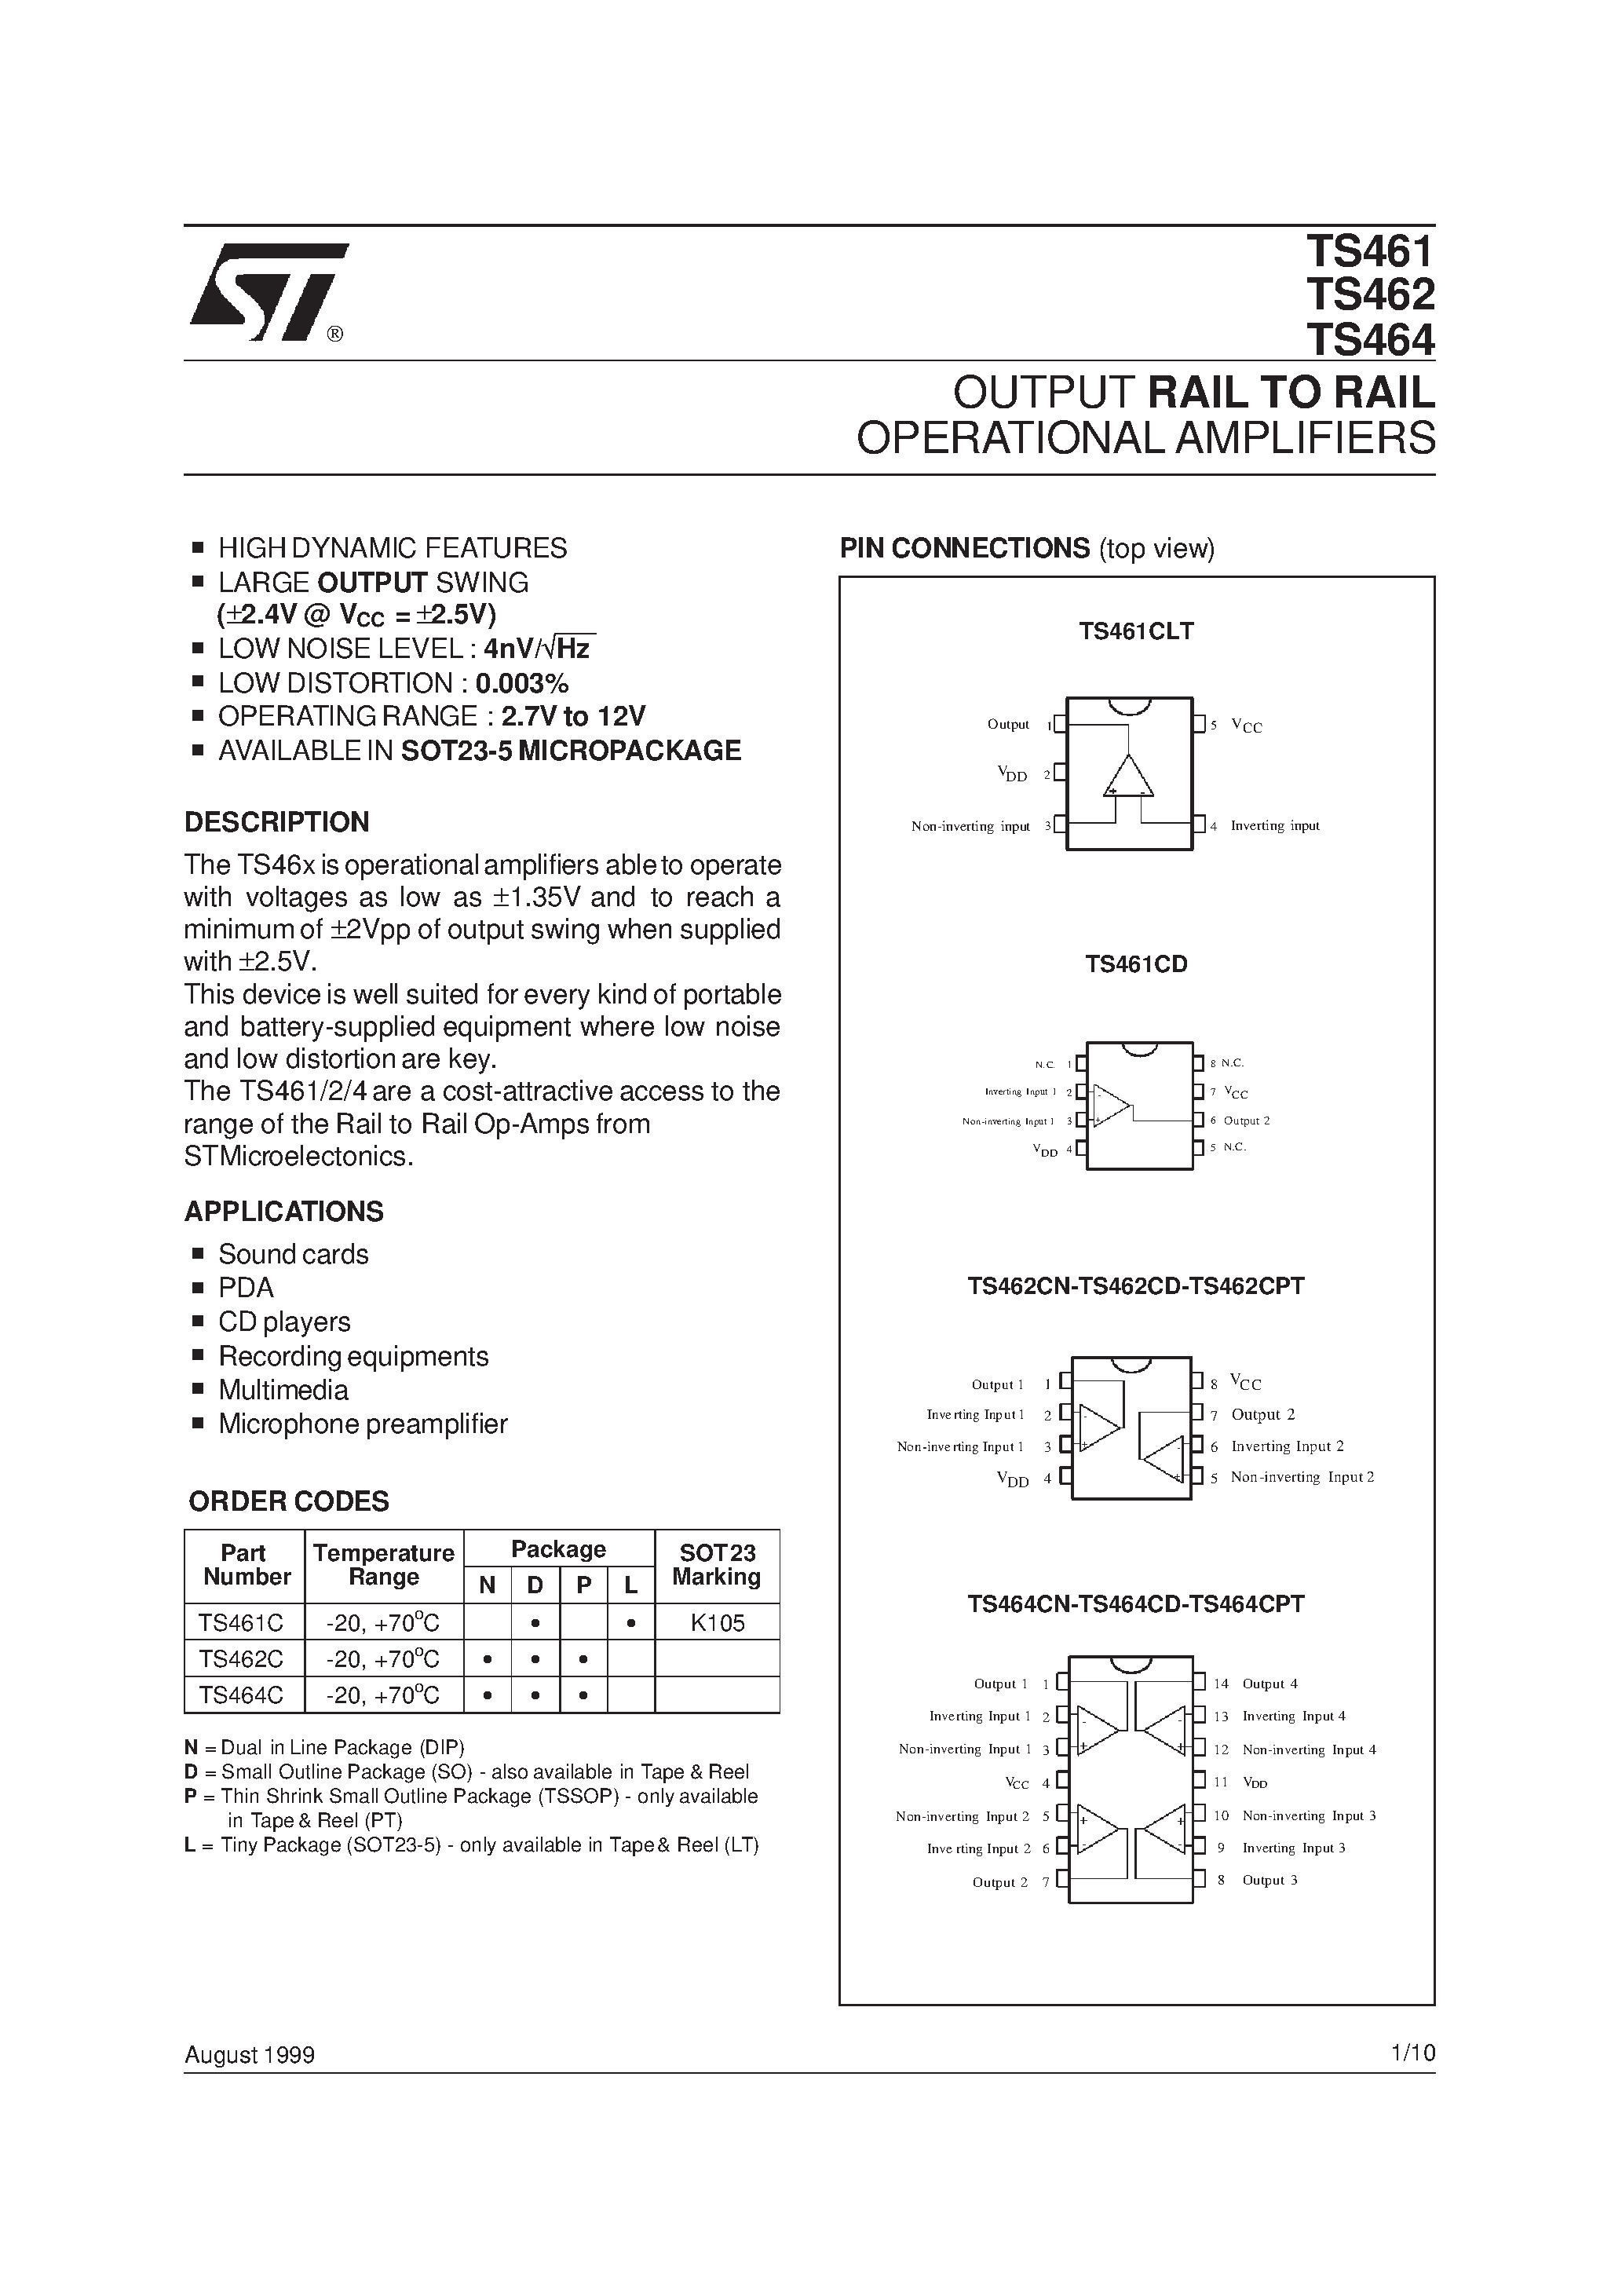 Datasheet TS464CD - OUTPUT RAIL TO RAIL OPERATIONAL AMPLIFIERS page 1